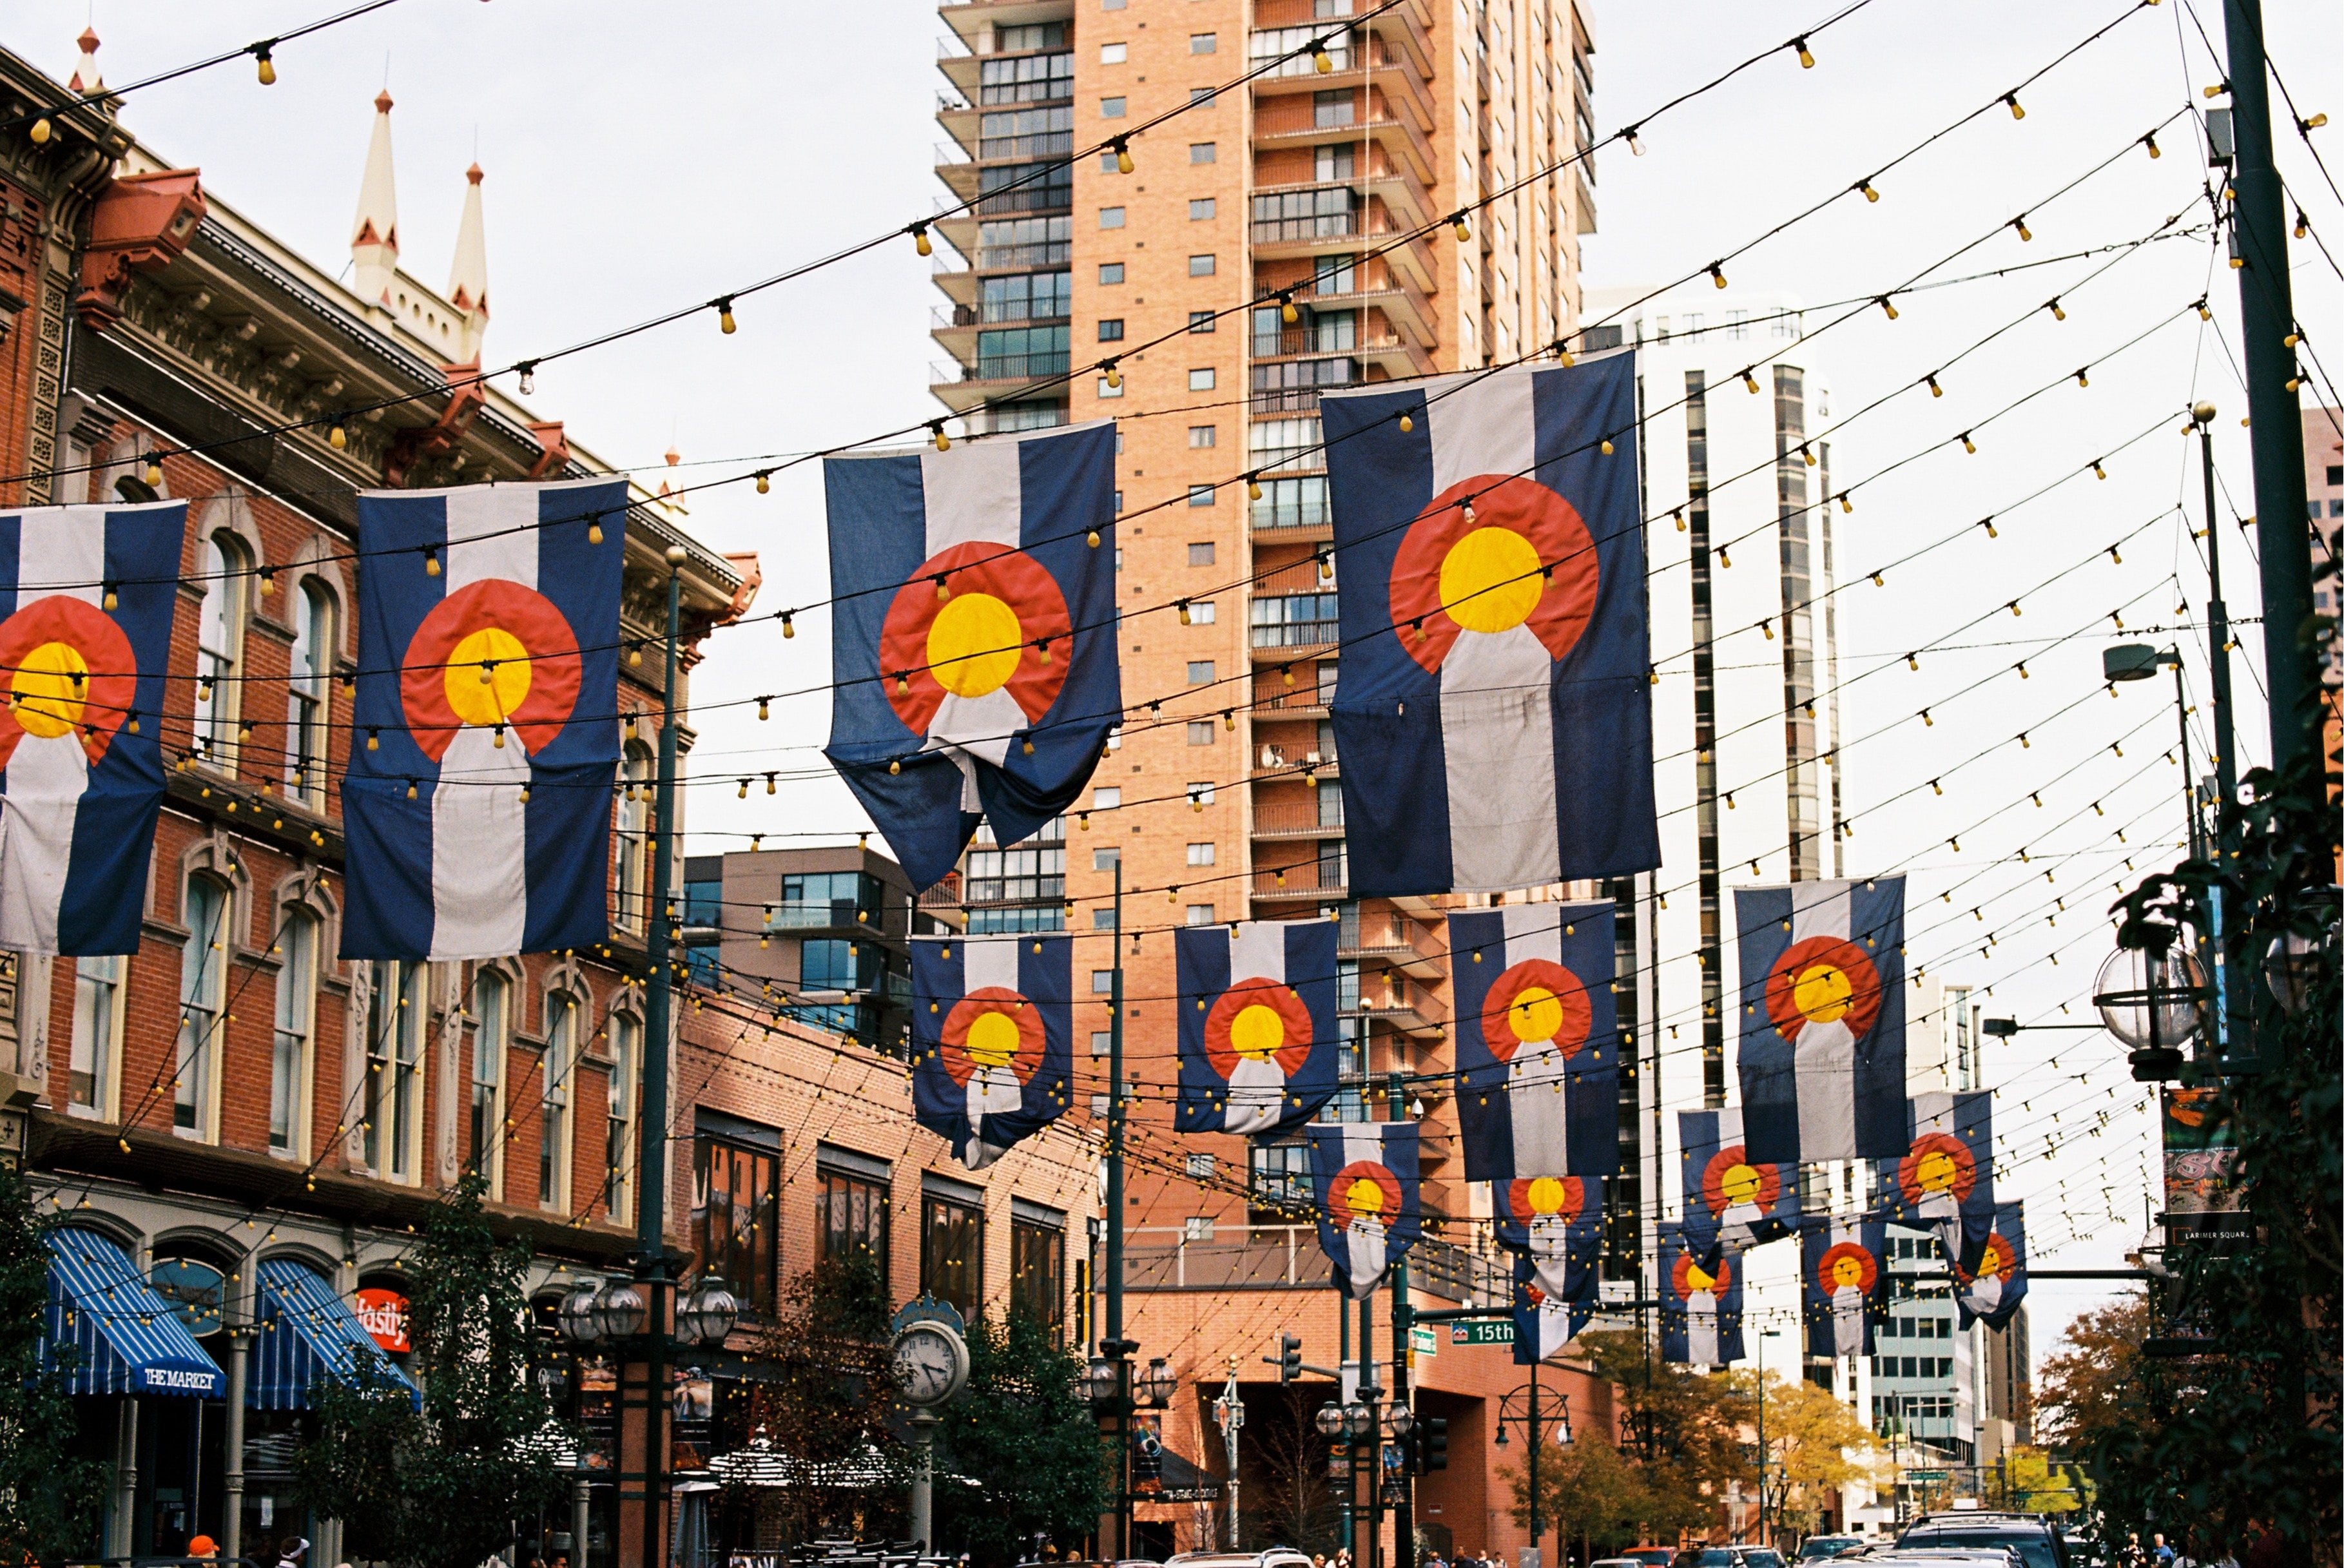 
Denver's Hottest Neighborhoods: An Insider's Guide